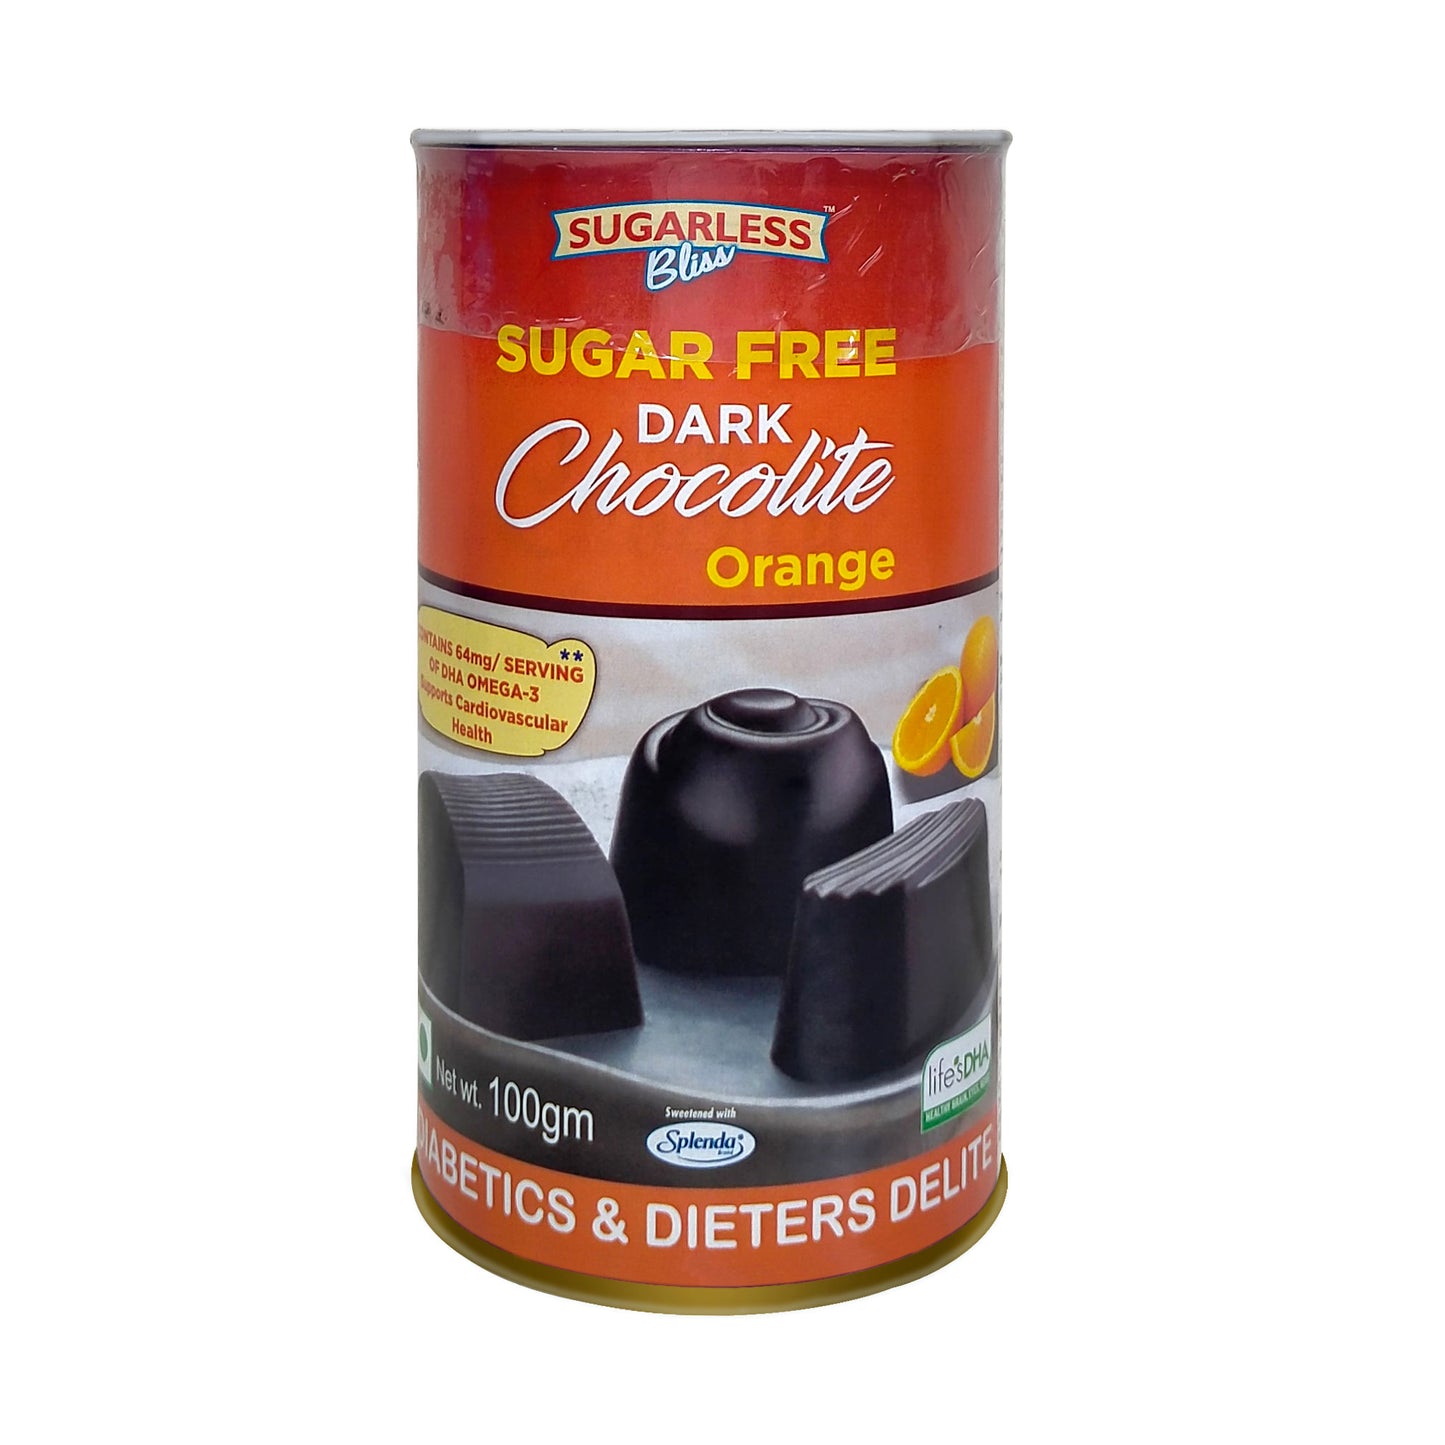 Sugar Free Dark Chocolate - Orange